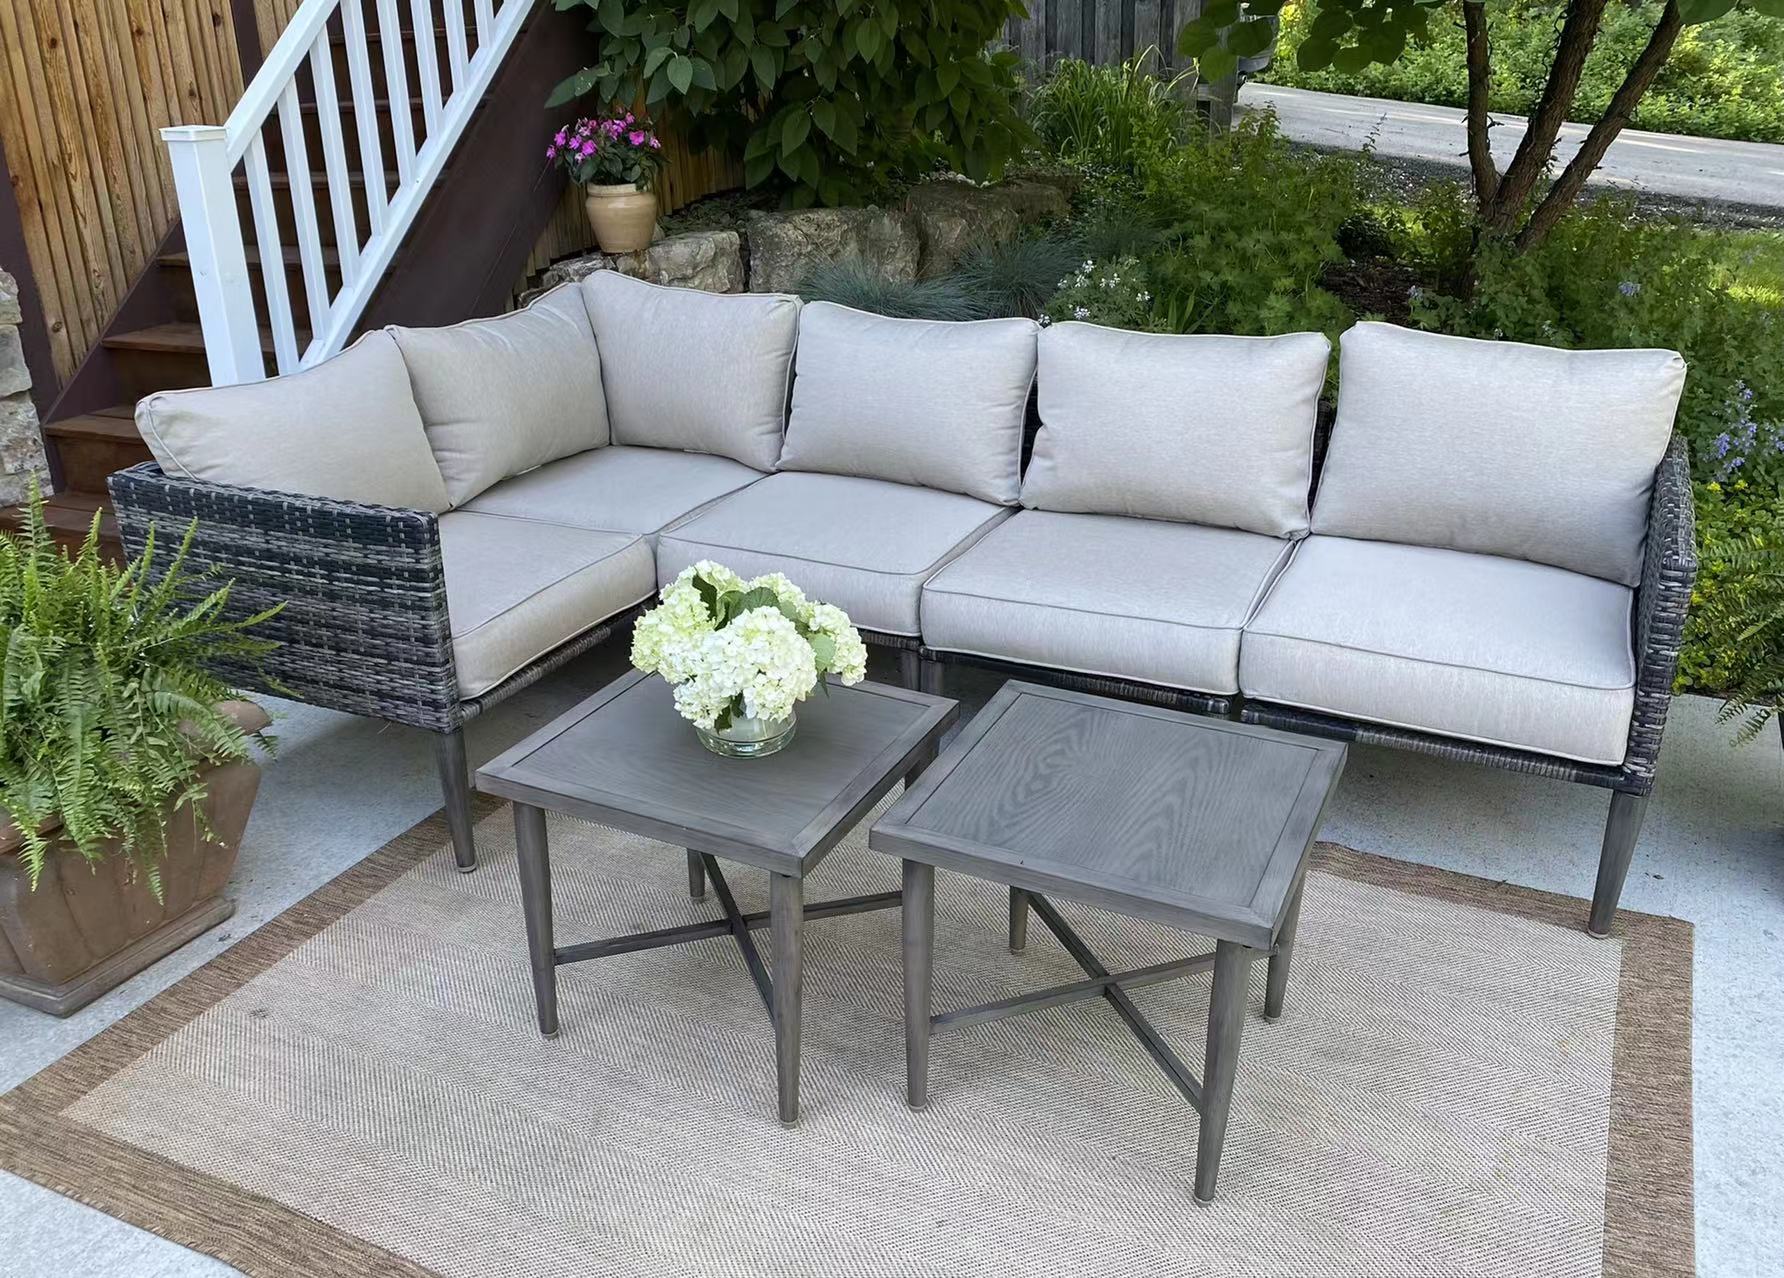 Donglin Outdoor Patio Furniture Sutton Creek 7-Piece Steel Sectional Sofa PE Wicker Rattan Set,Gray - image 16 of 16